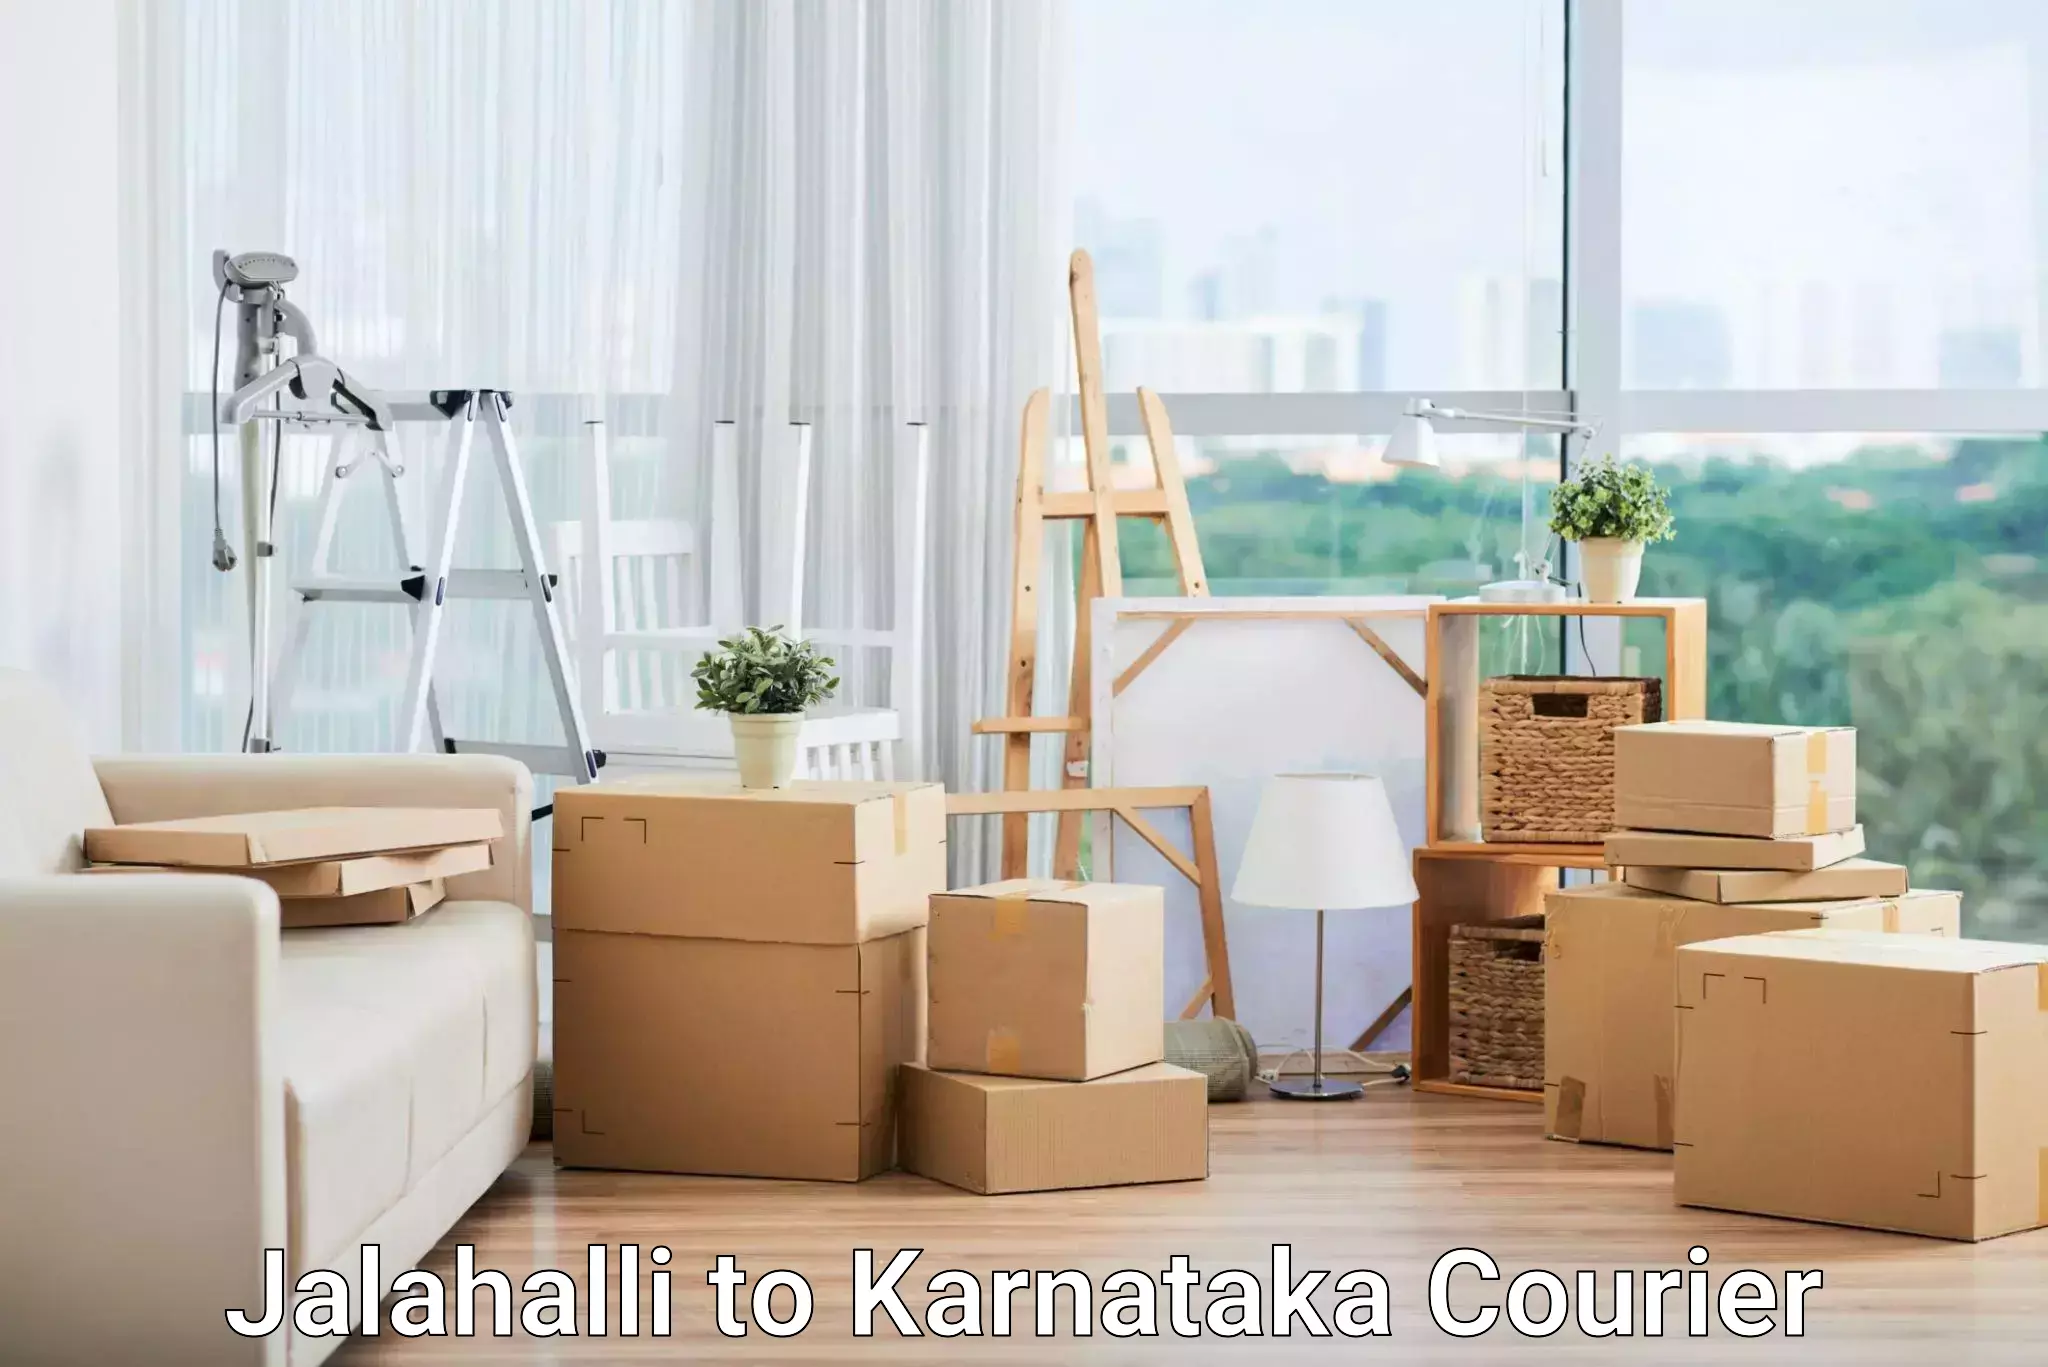 Courier service innovation Jalahalli to Karnataka